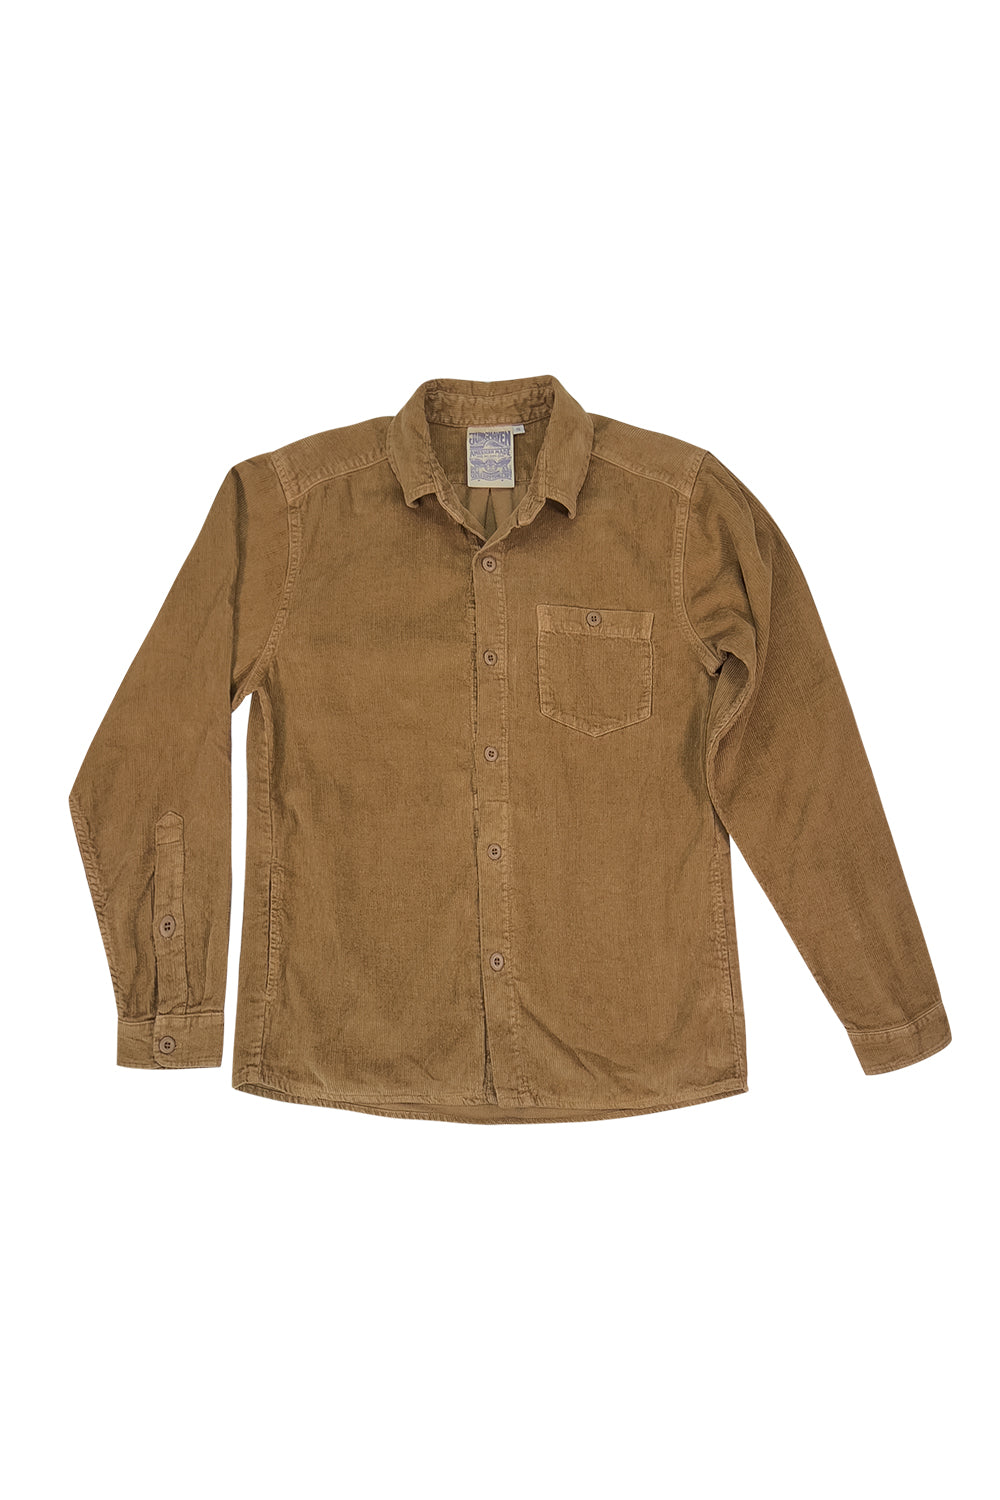 Oxnard Shirt Jacket | Jungmaven Hemp Clothing & Accessories Color: Coyote